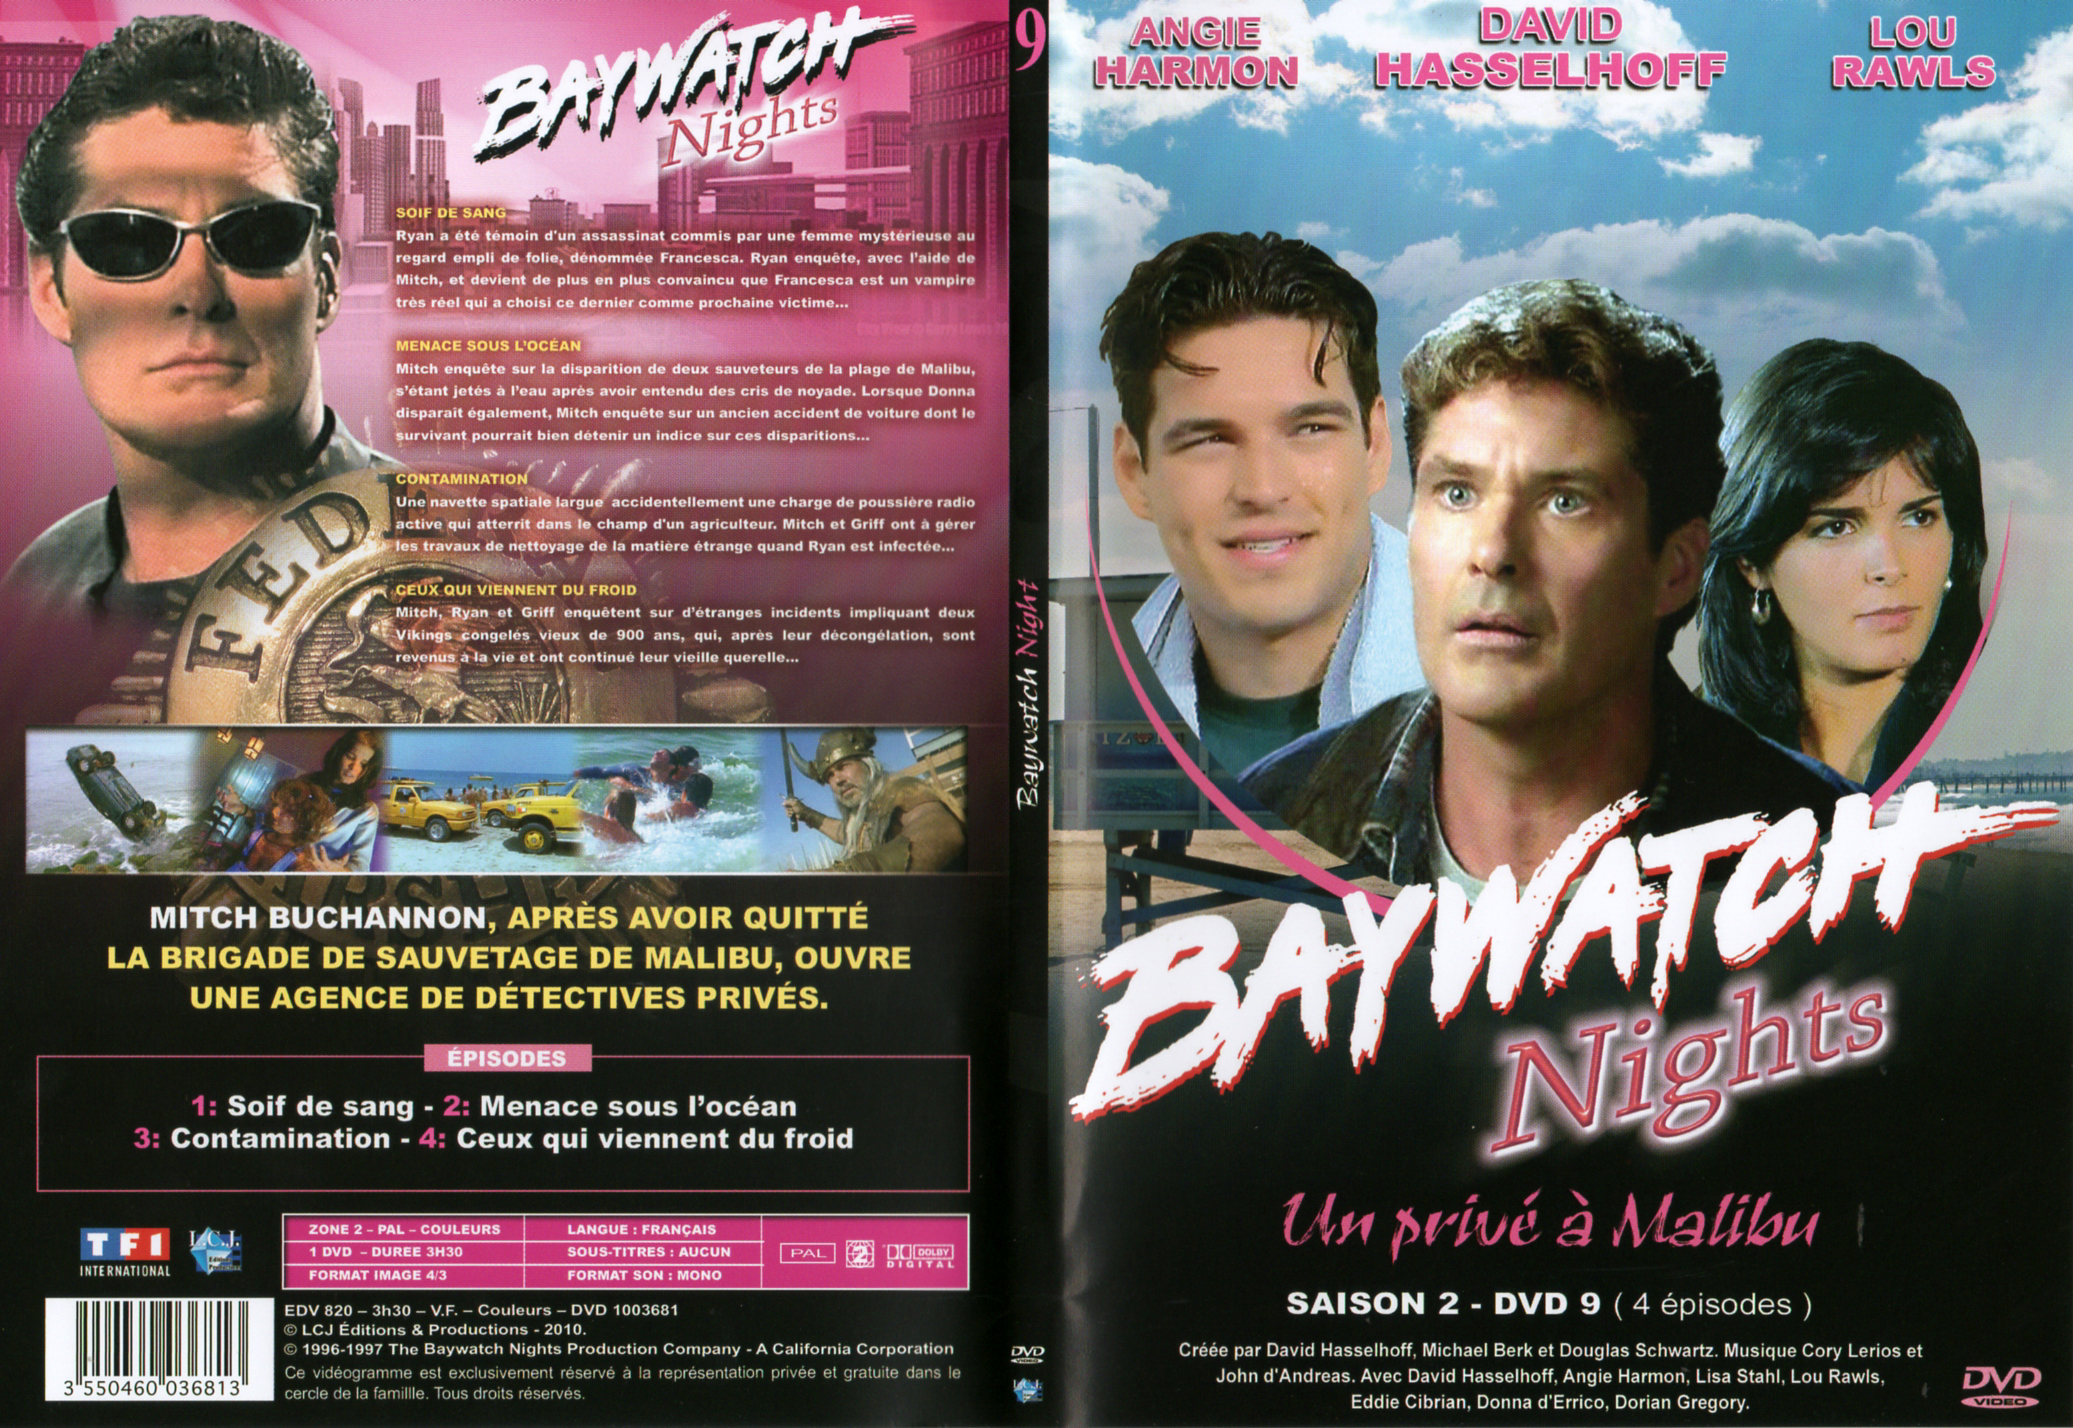 Jaquette DVD Baywatch nights Saison 2 DISC 9